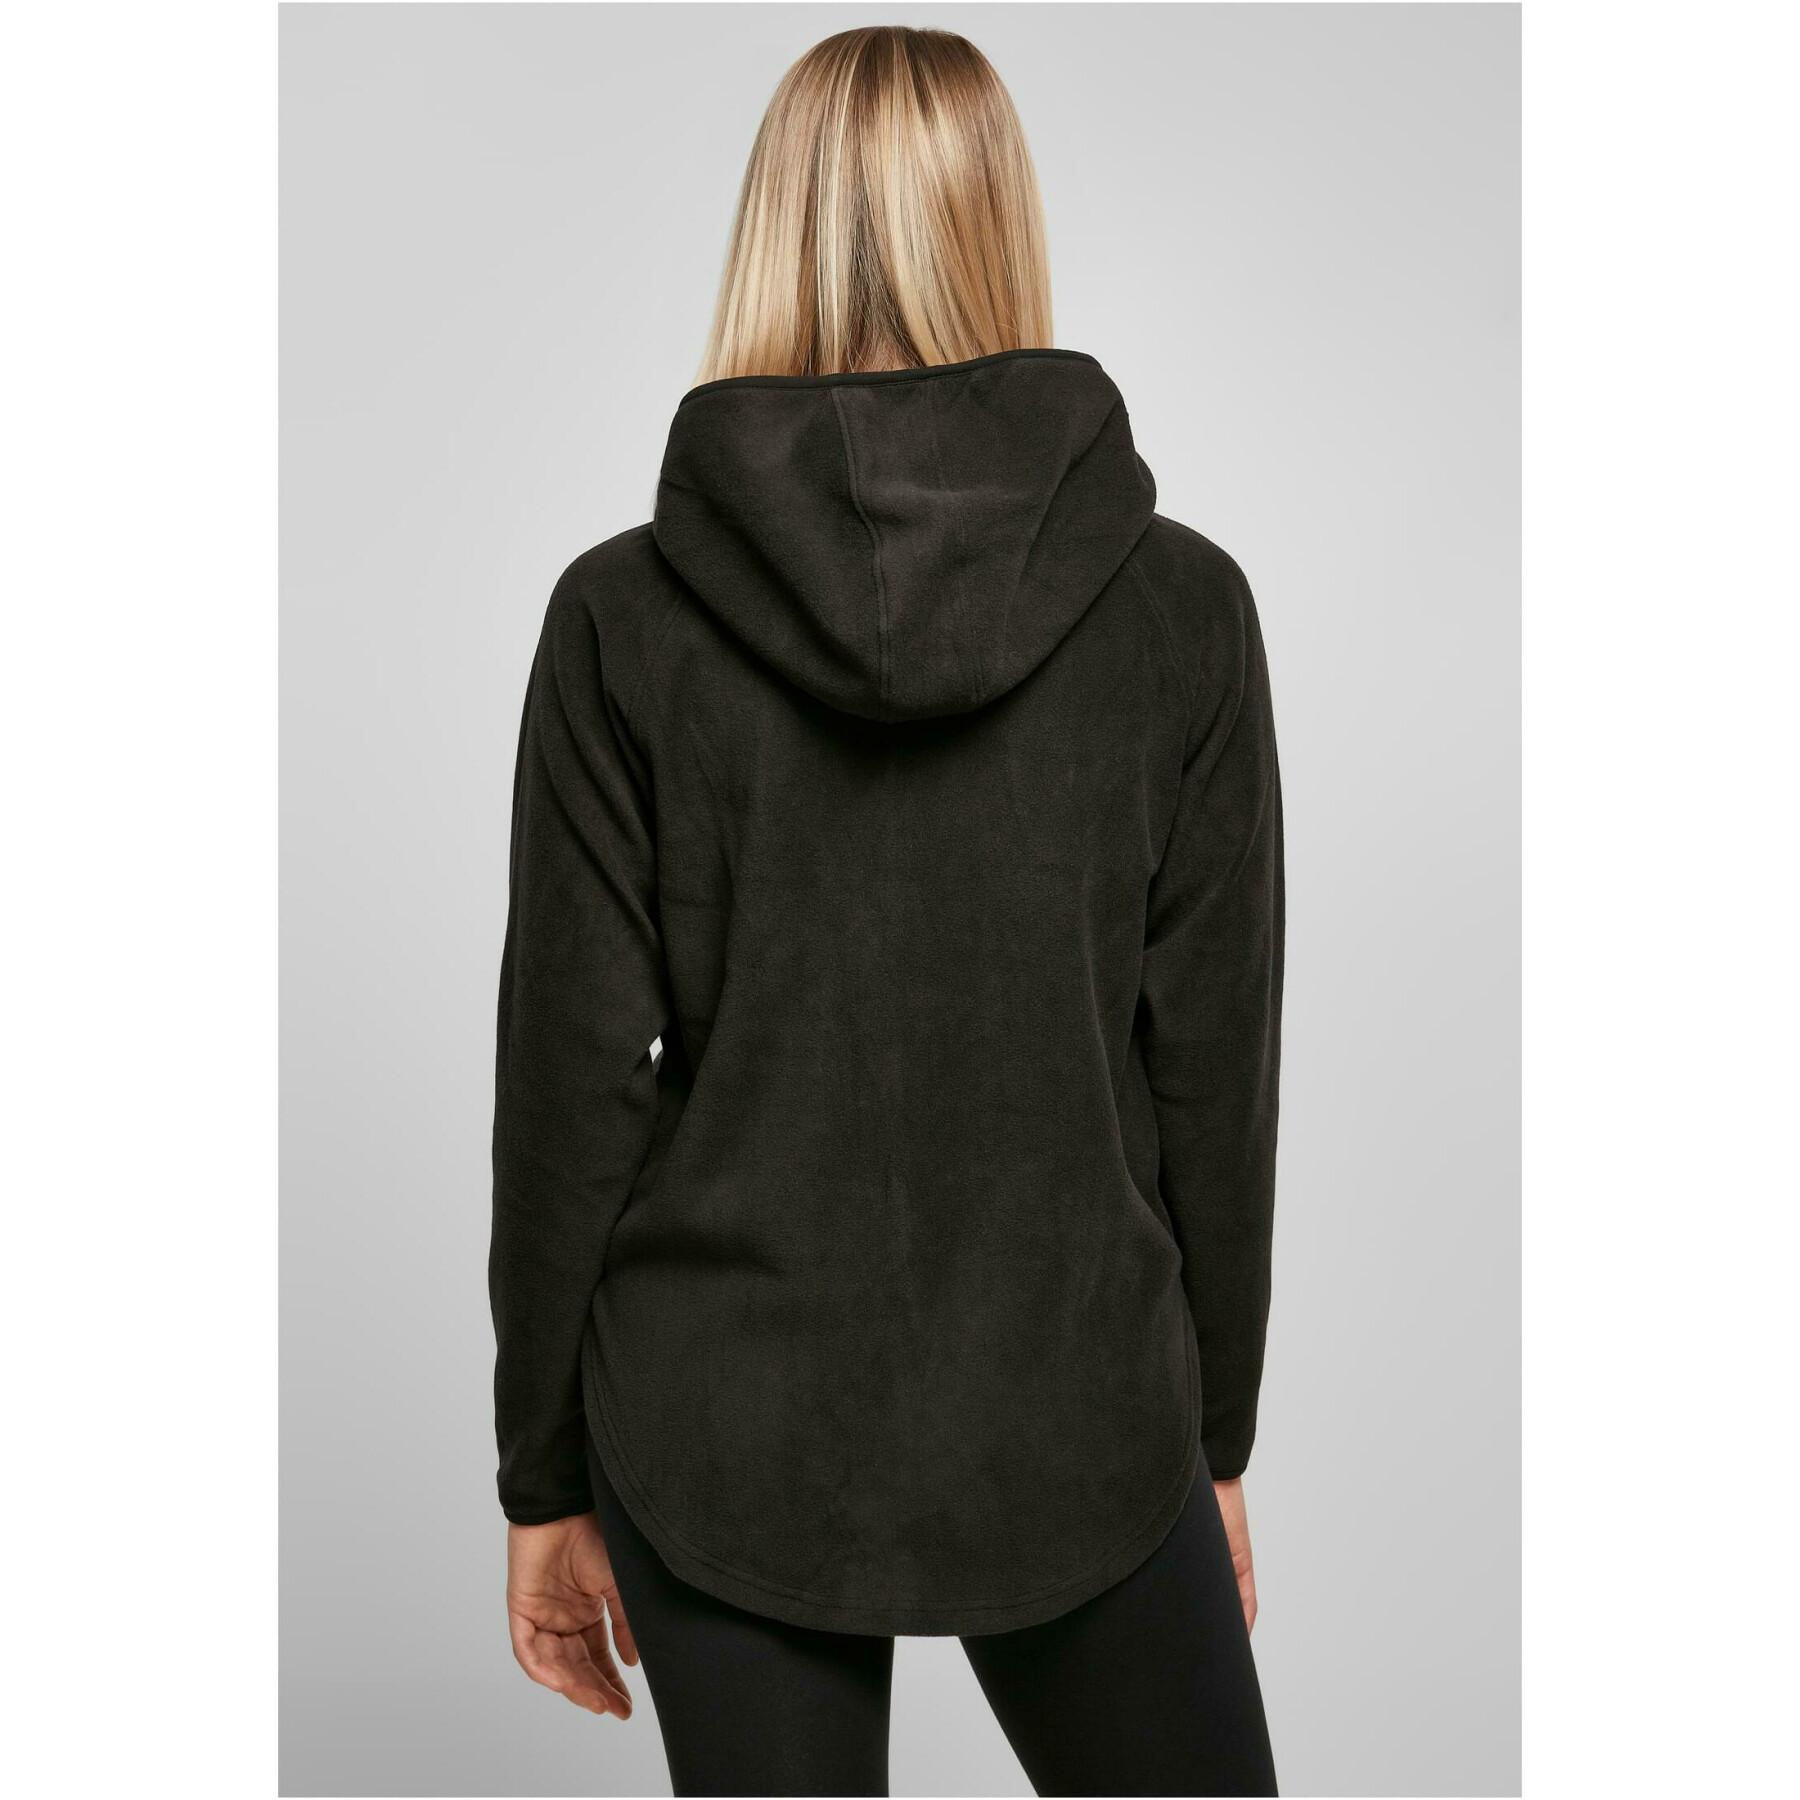 Women's hooded fleece Urban Classics GT